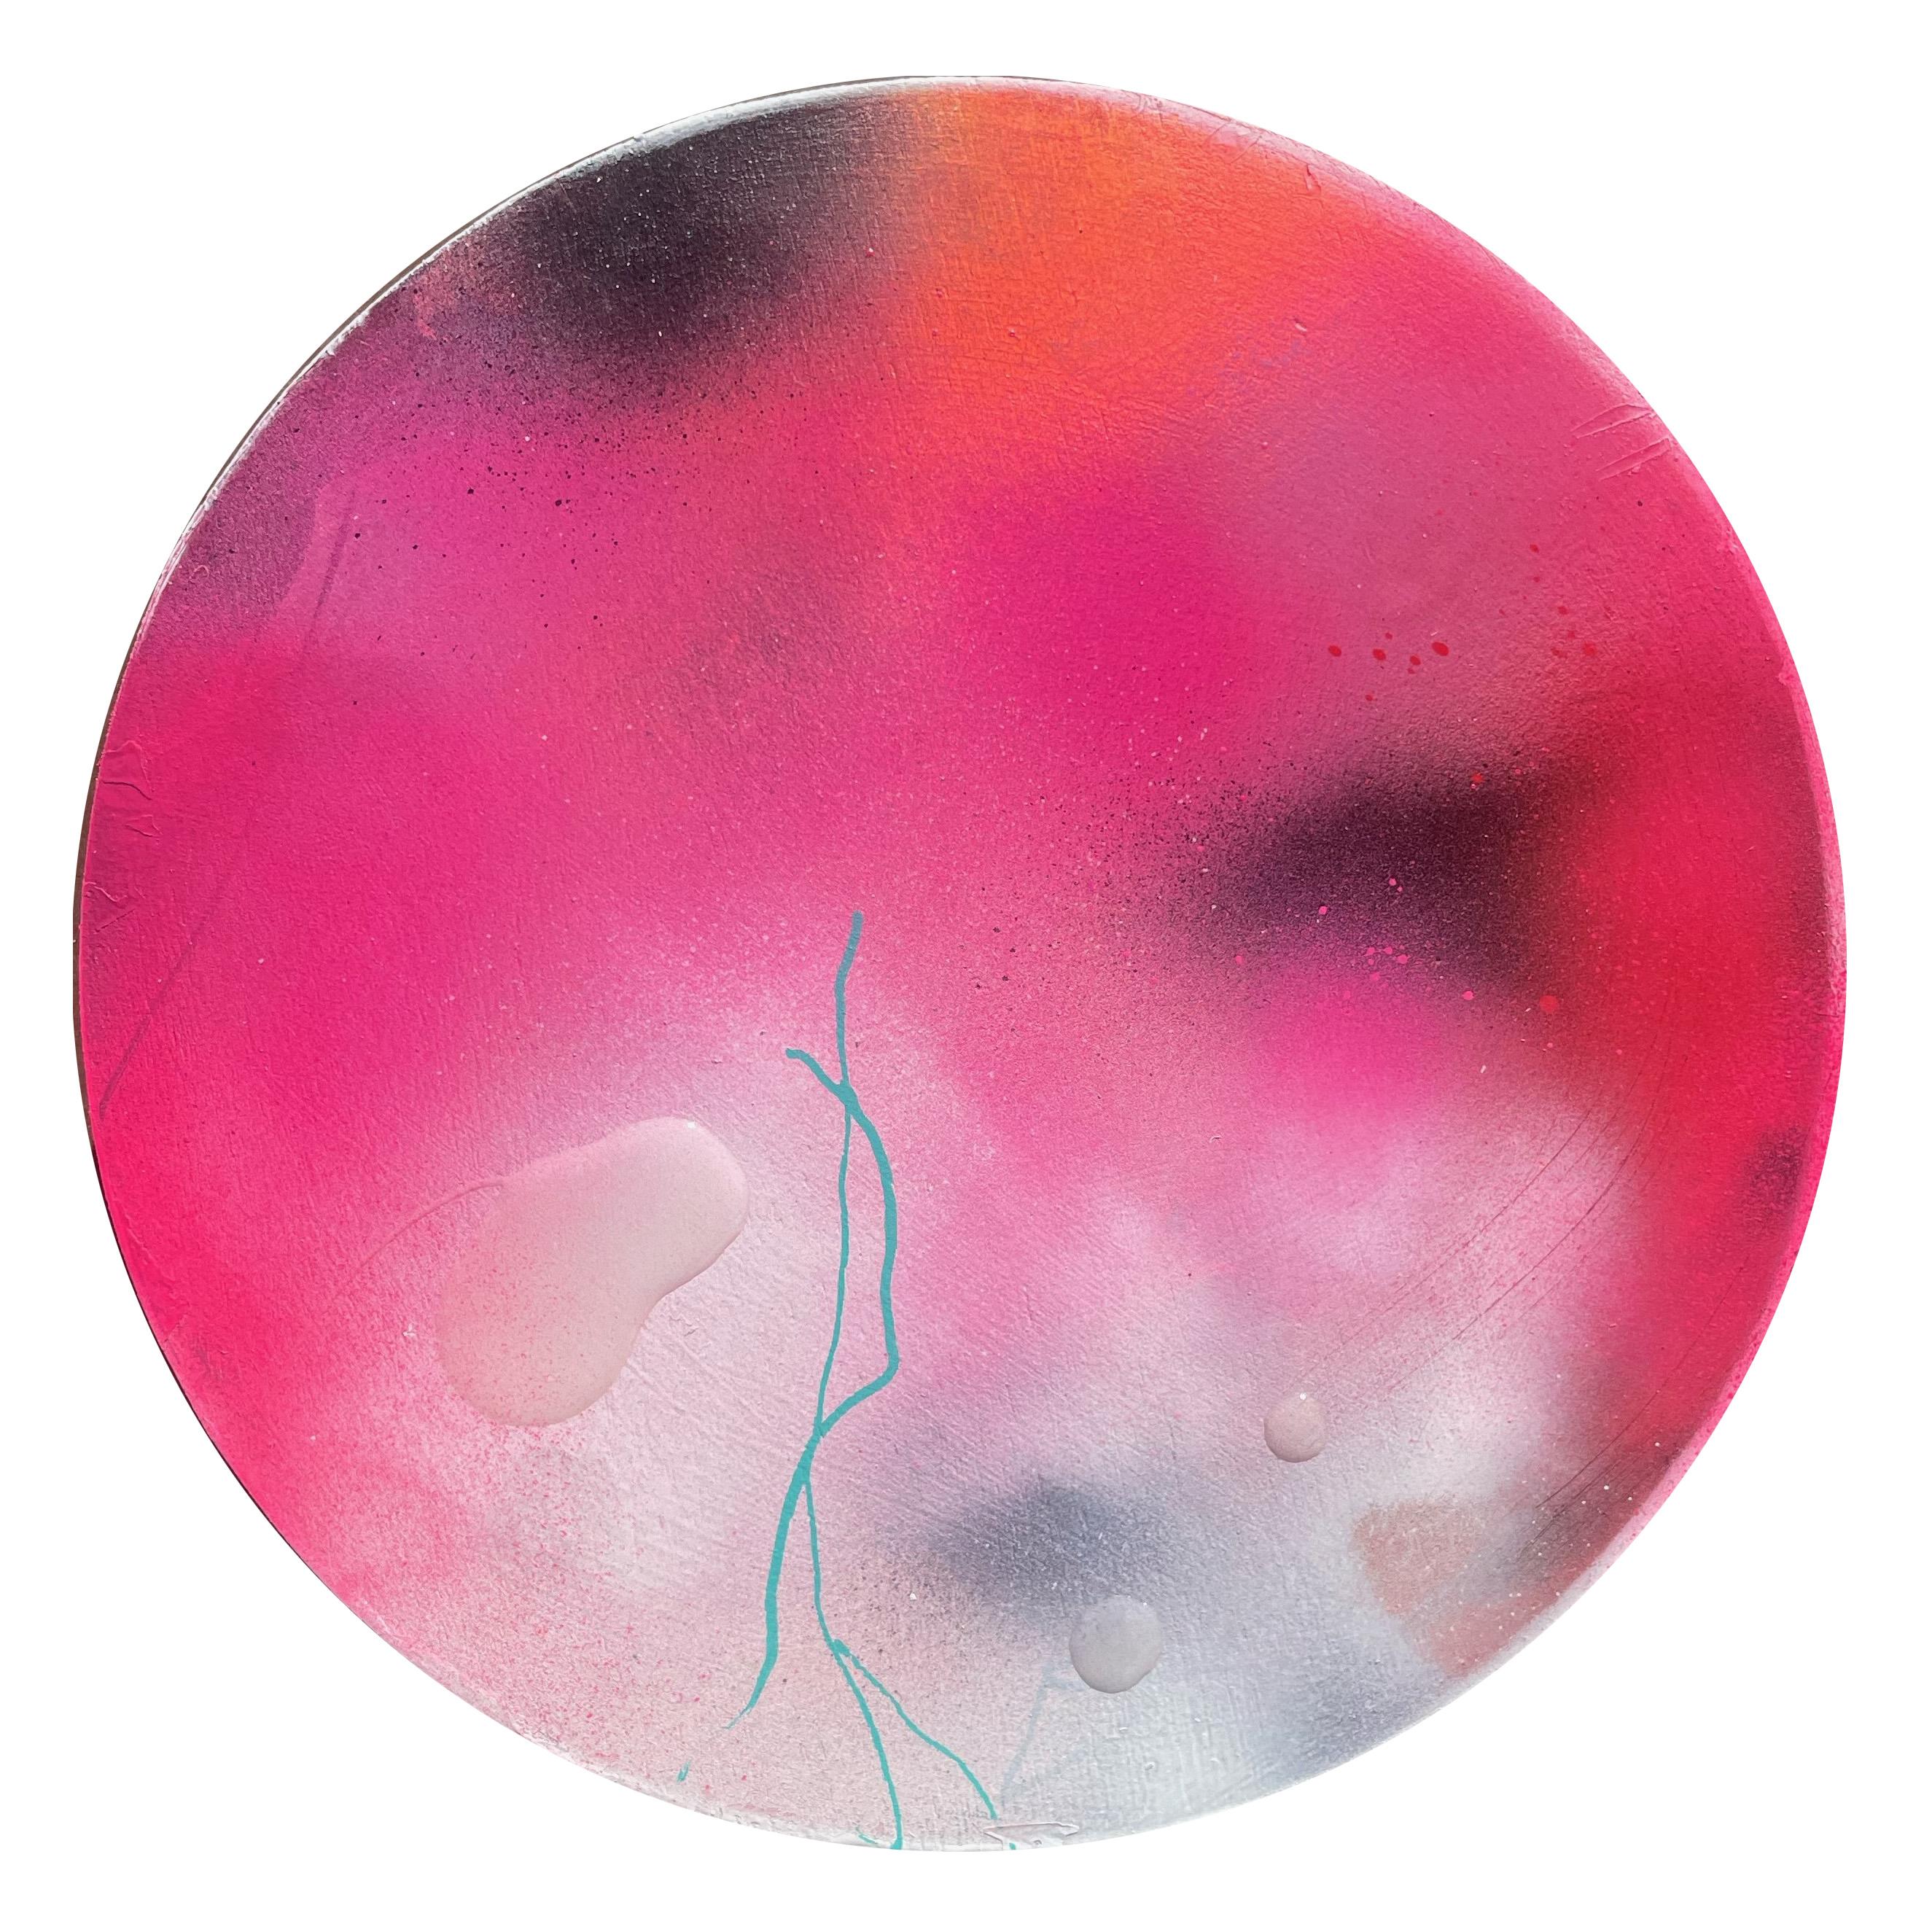 "Pearly Dewdrops 3" Contemporary Colorful Abstract Circular Painting - Mixed Media Art by David Hardaker